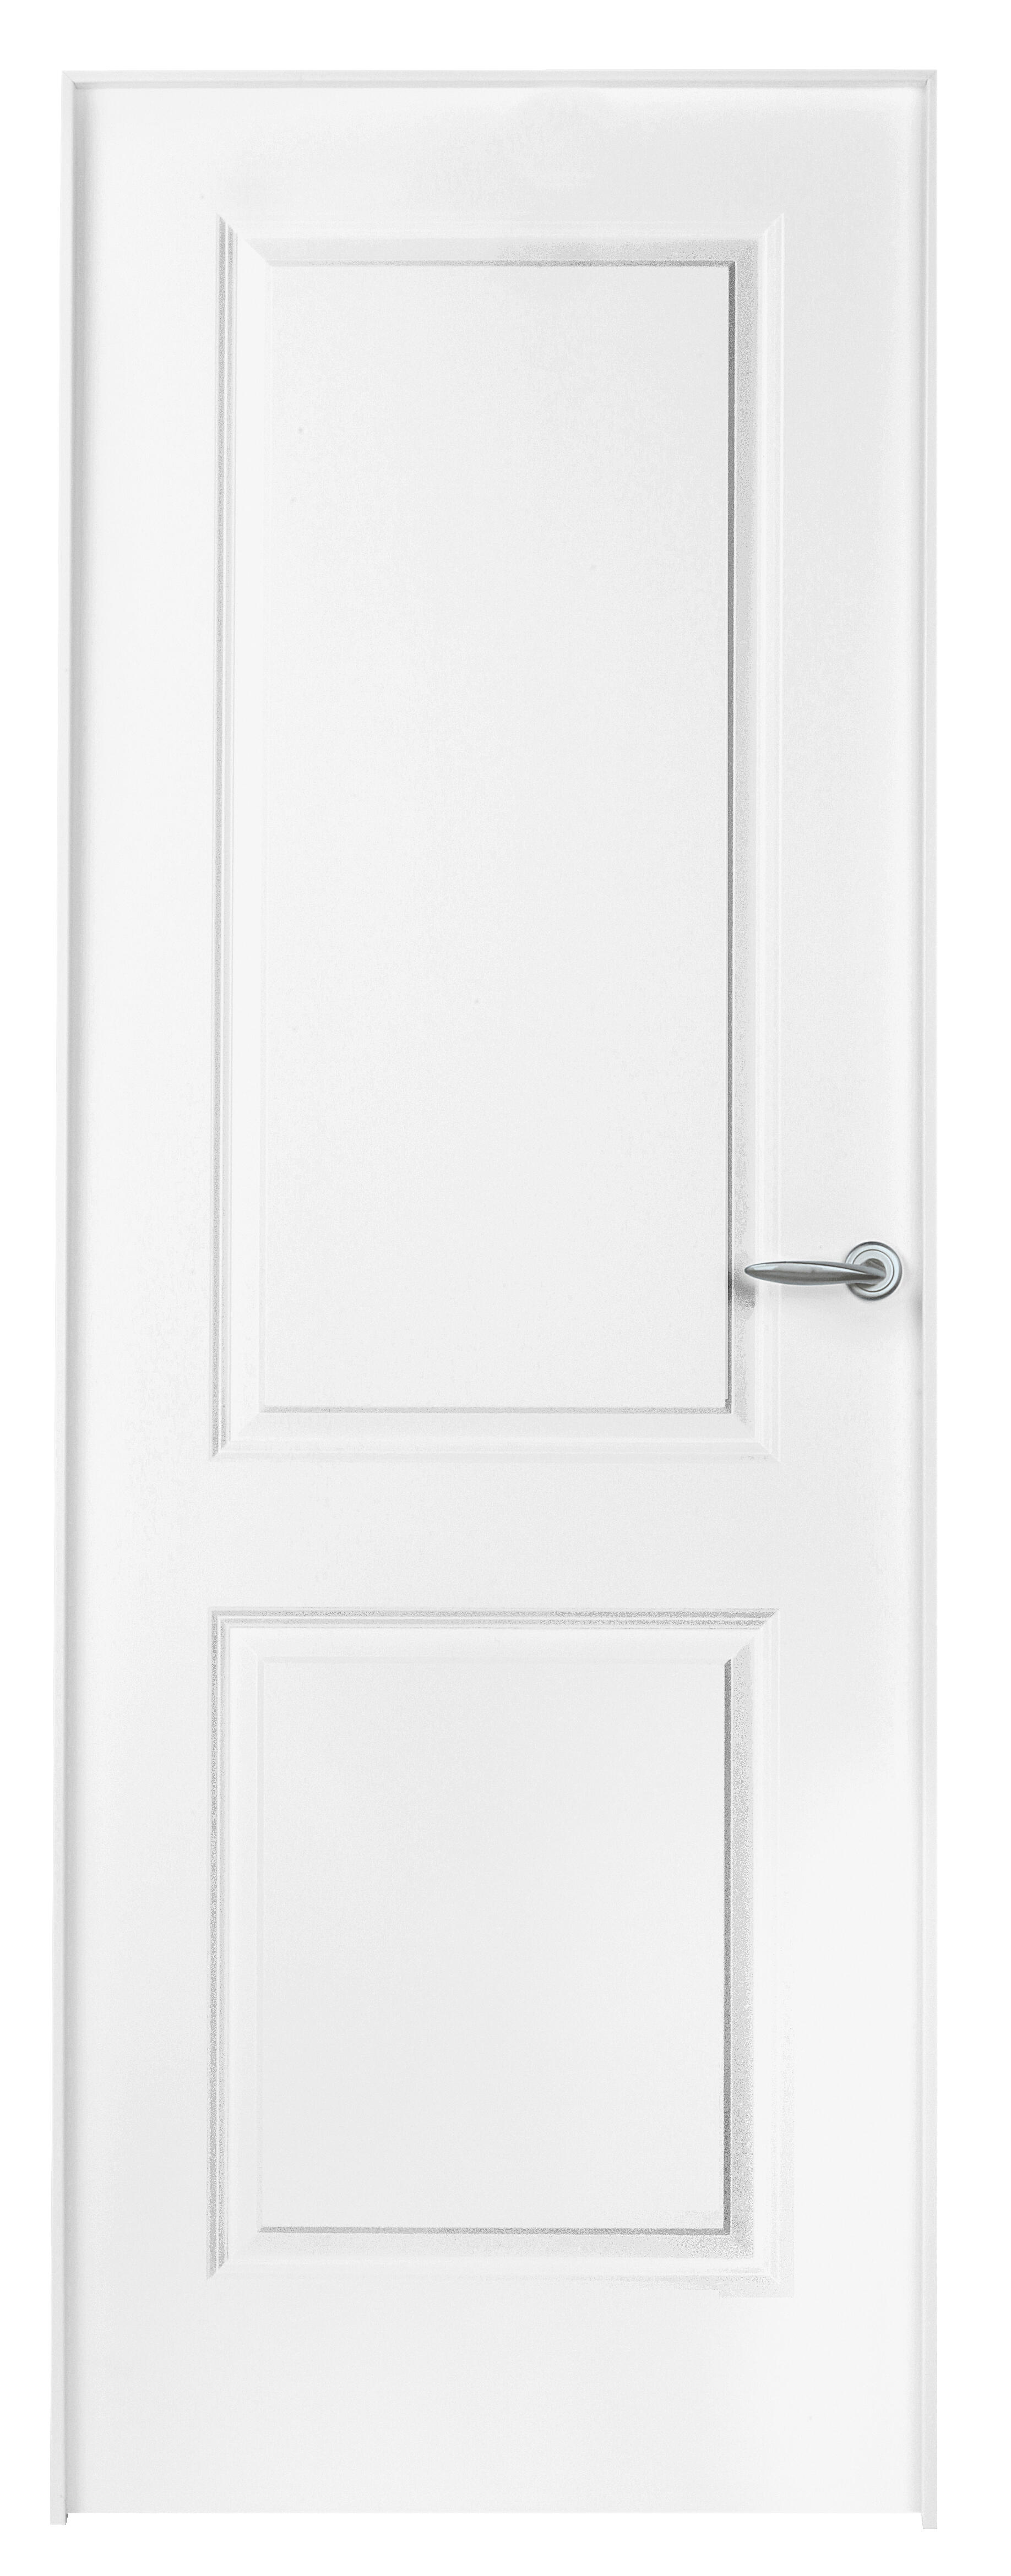 Puerta bonn blanco apertura izquierda 92.5cm